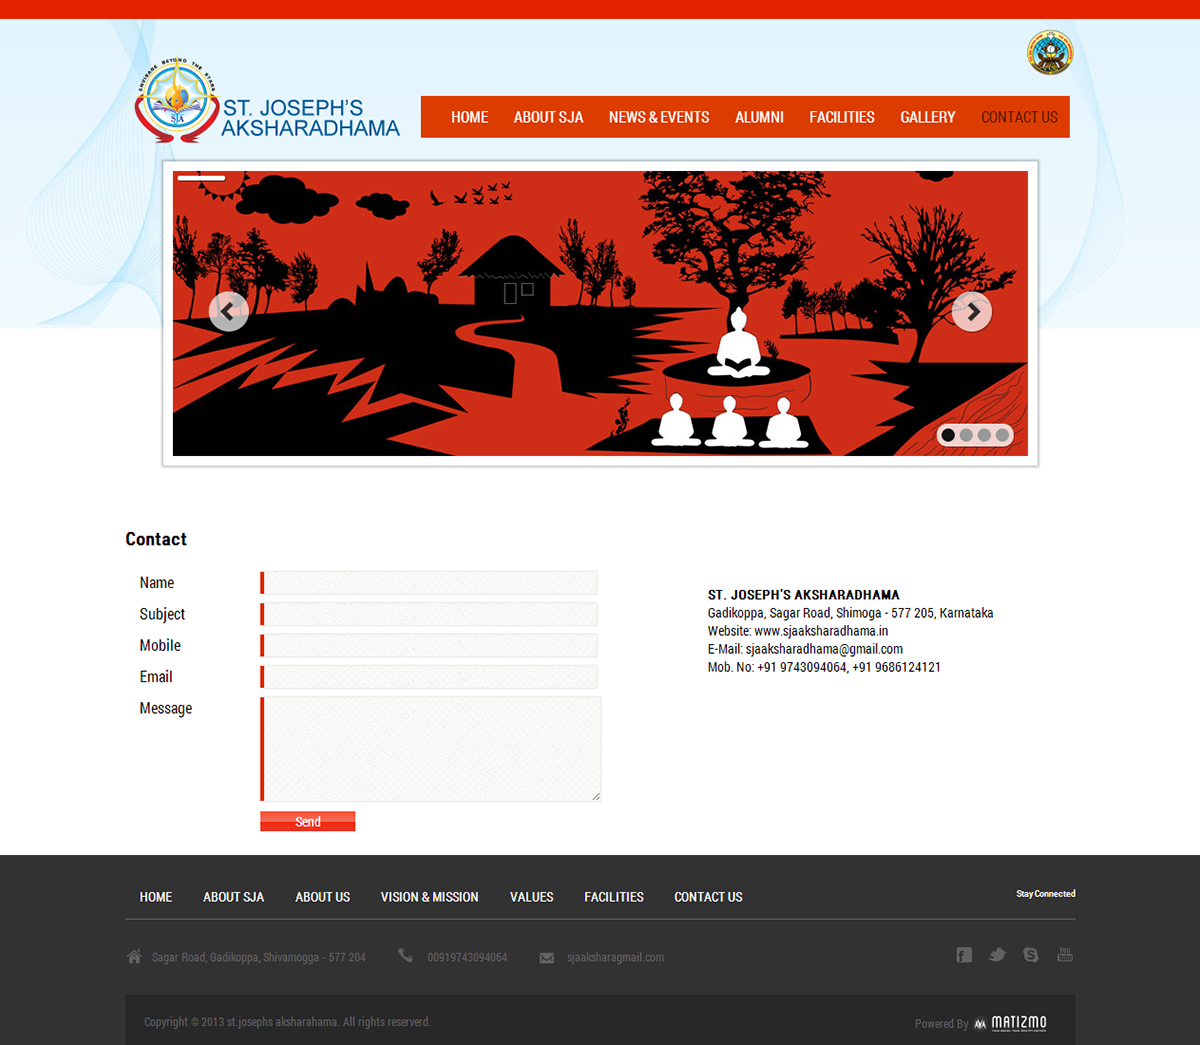 ST. JOSEPH’S AKSHARADHAMA matizmo shambu rajeshvaidyanathan Behance school Education concept Web design